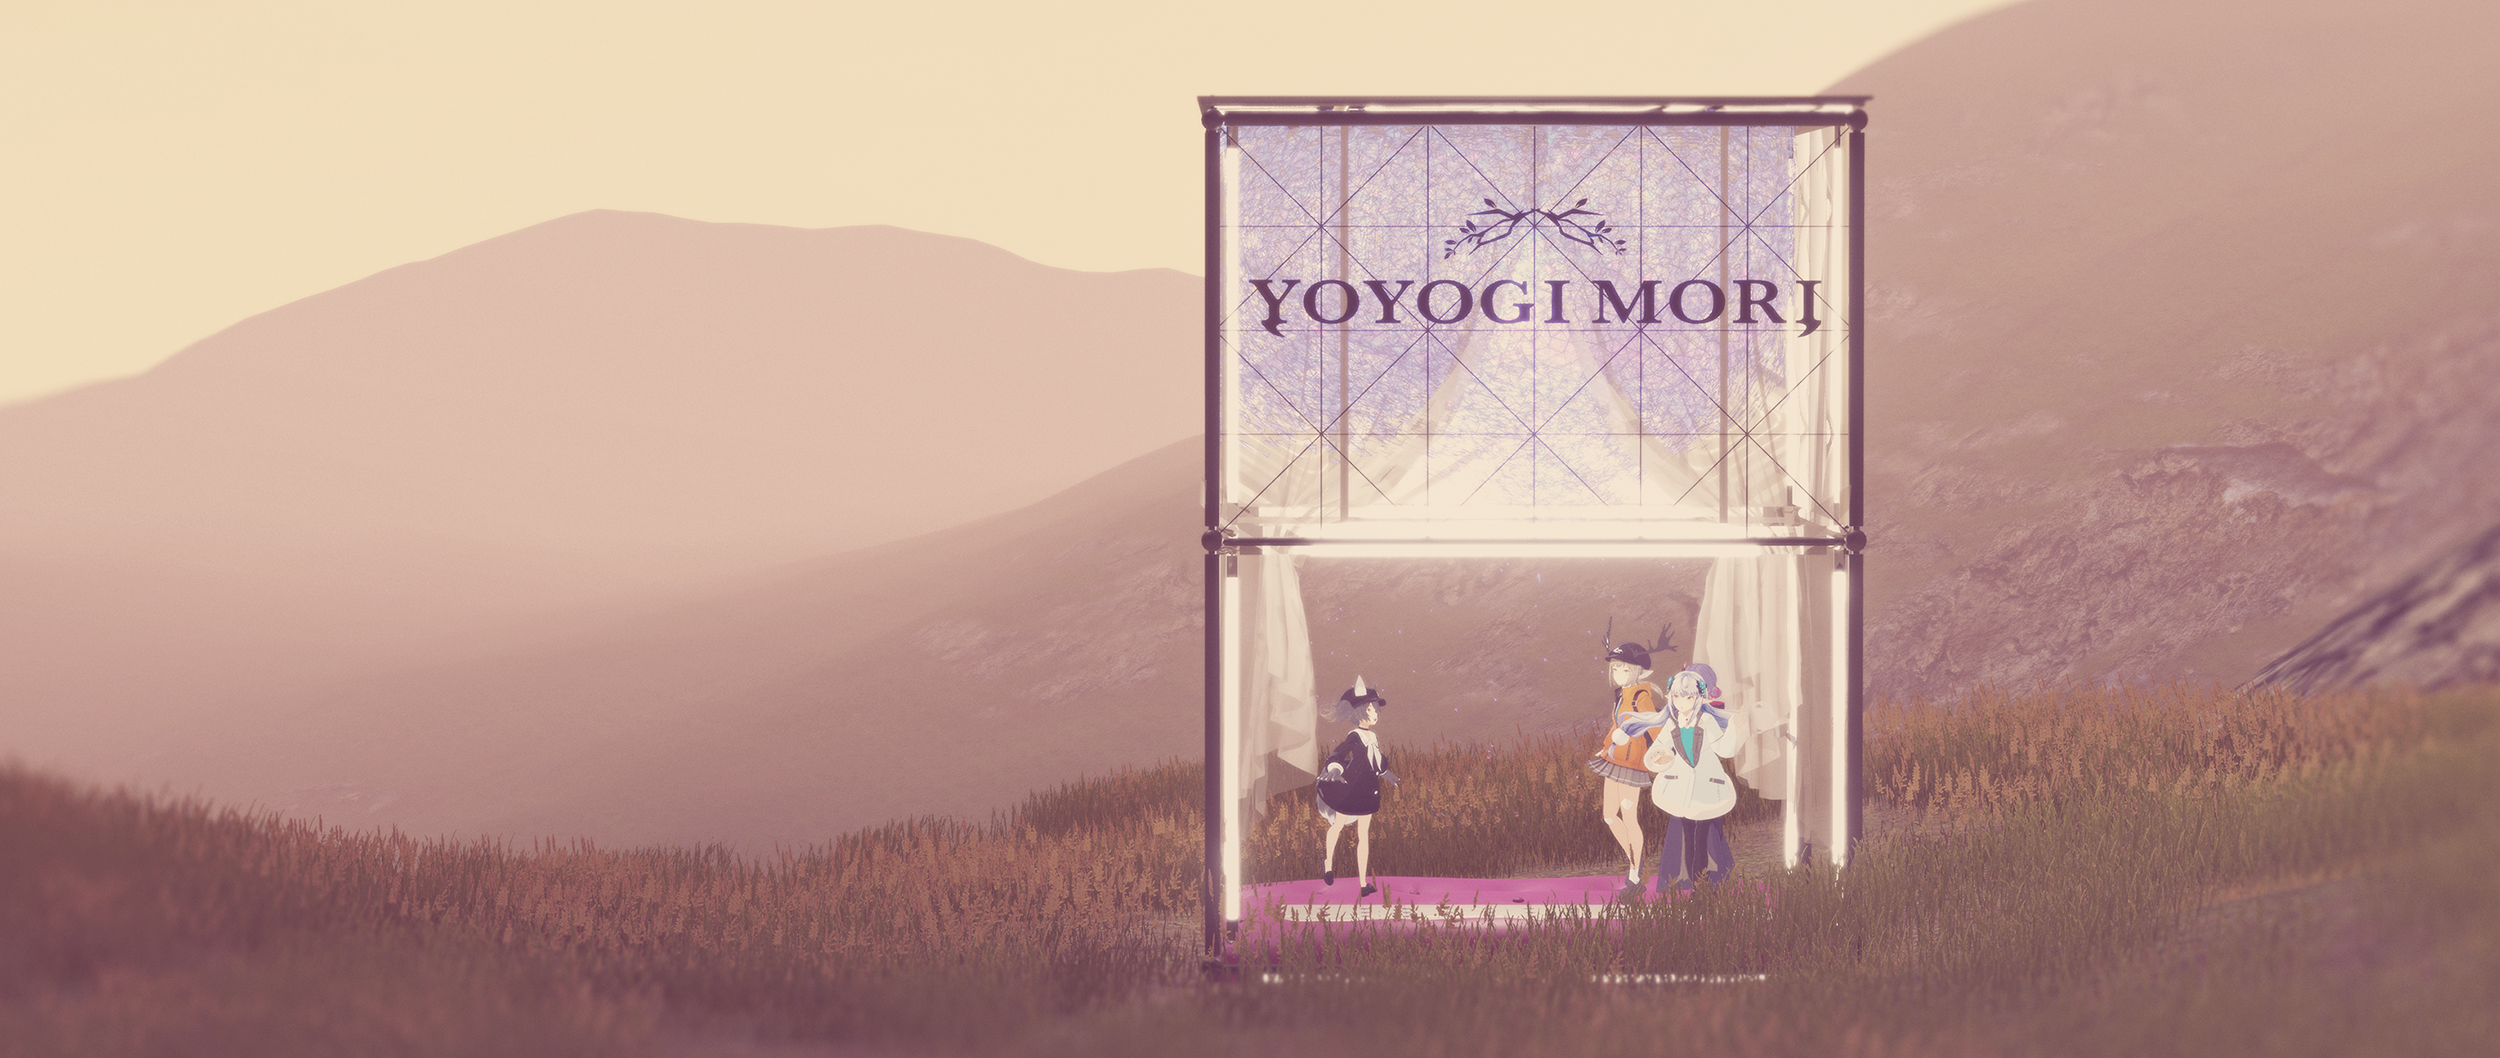 yoyogi mori